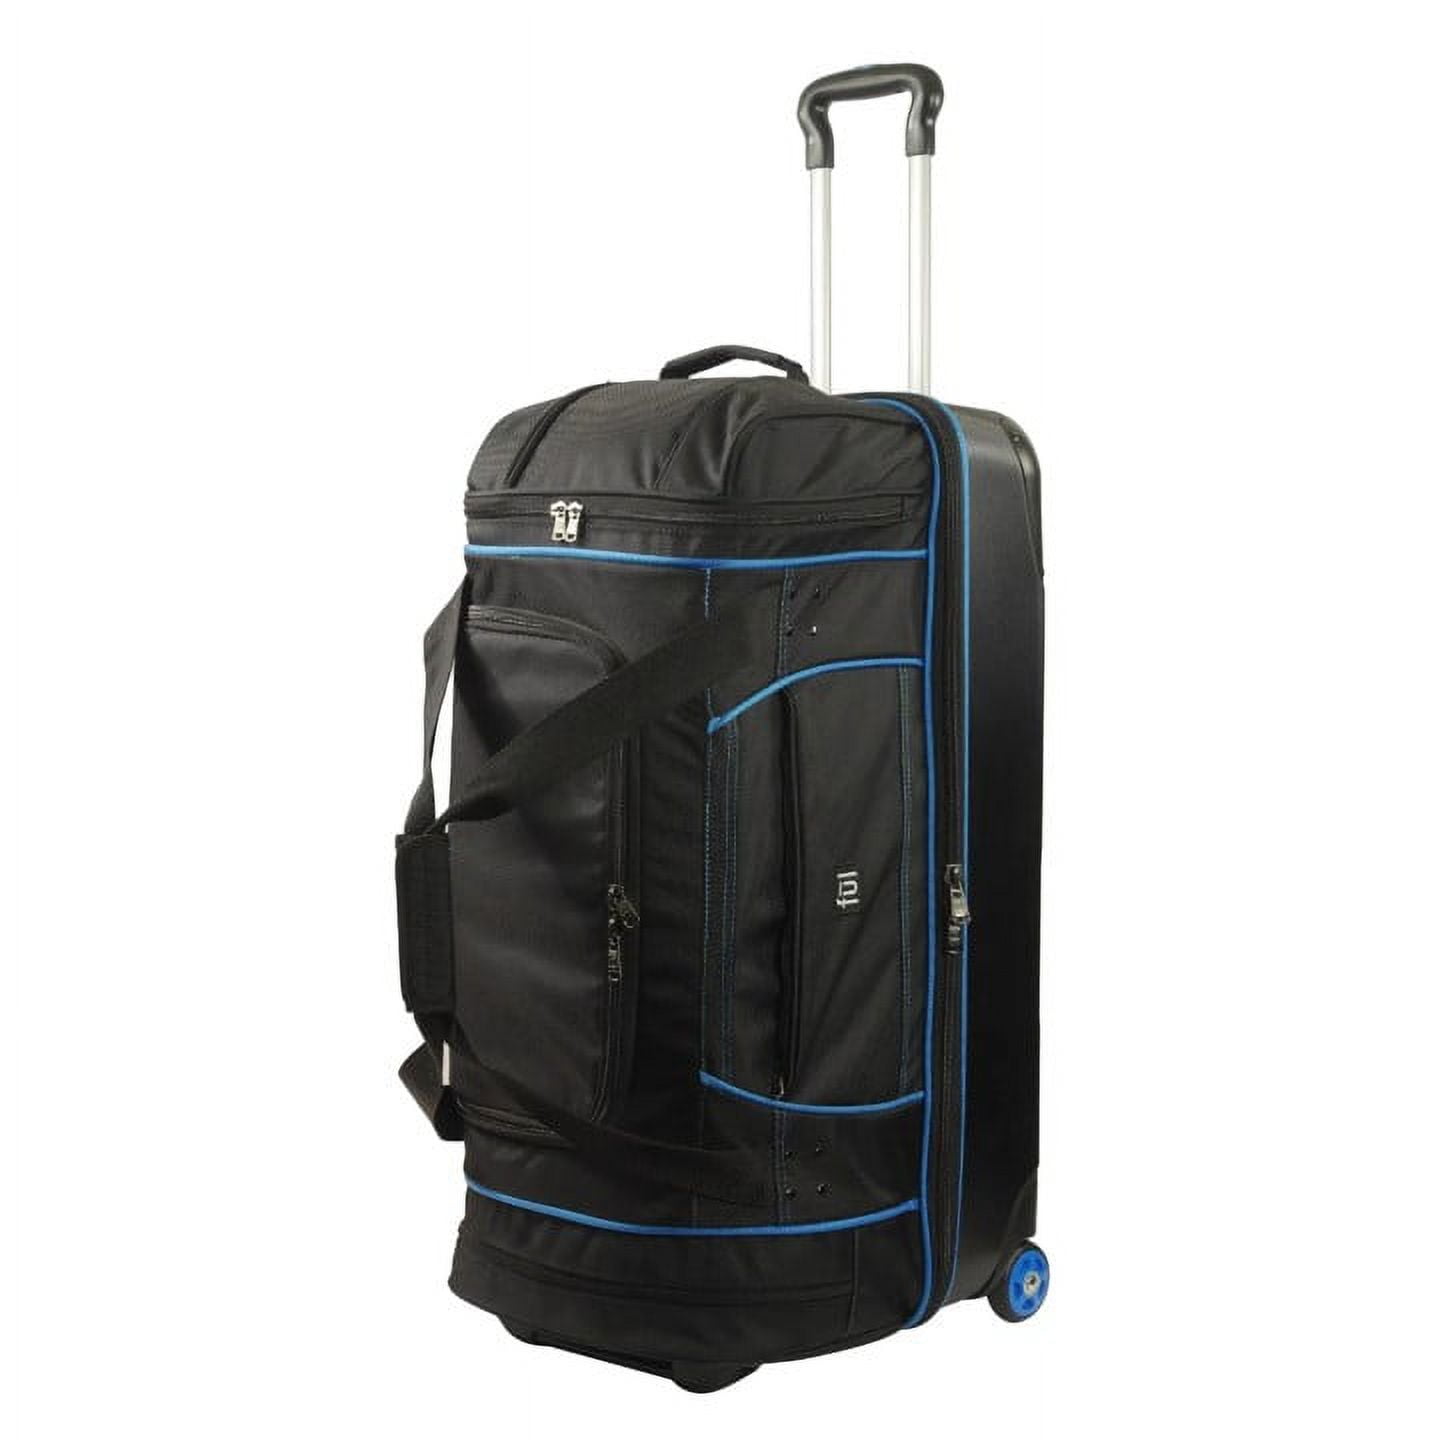 Wheeled Duffle Bag Luggage - 100L Large Rolling Foldable Duffel